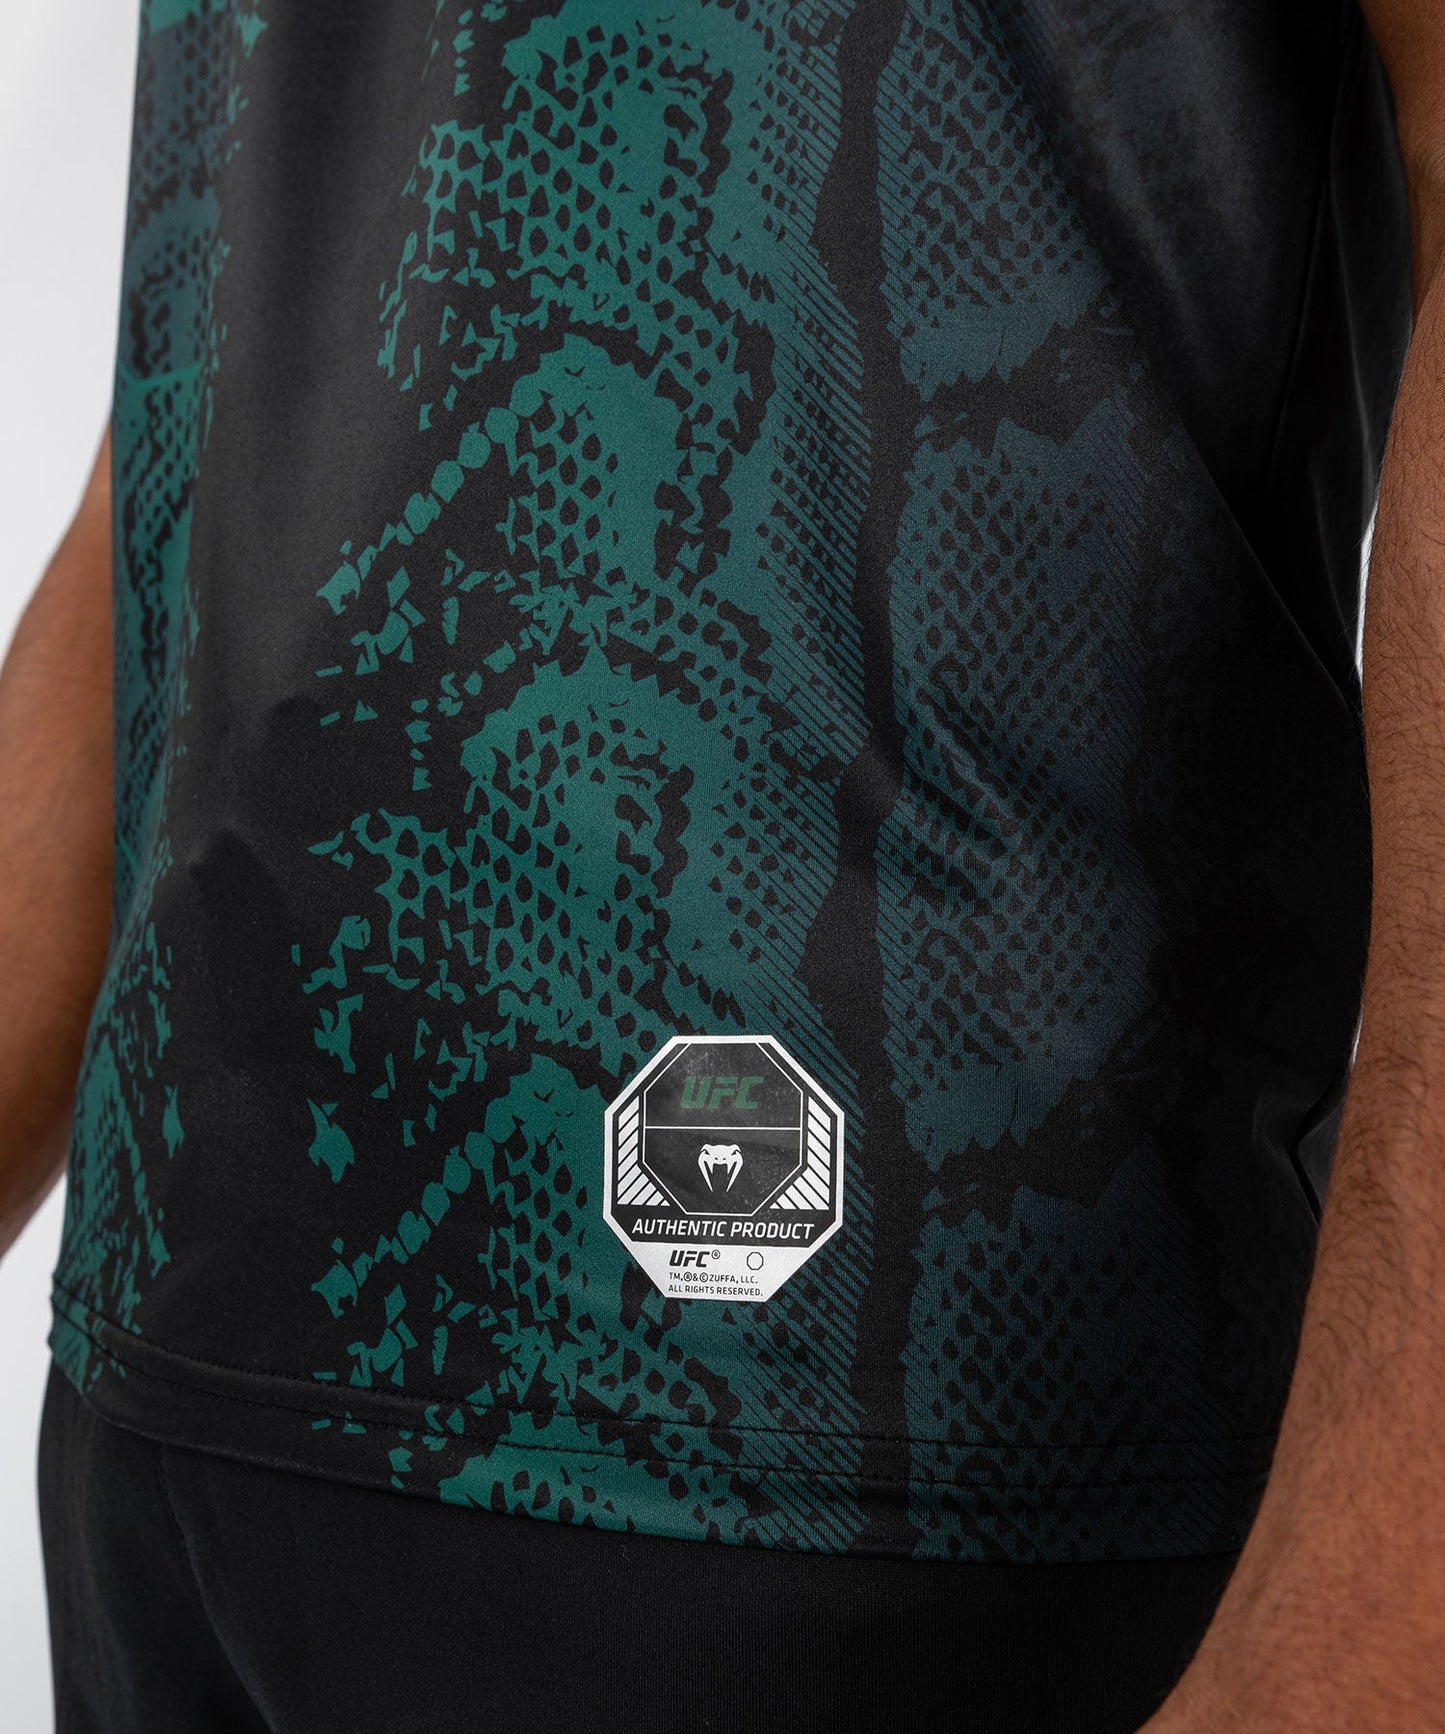 UFC Adrenaline by Venum Personalized Authentic Fight Night Camiseta de hombre - Emerald Edition - Verde/Negro